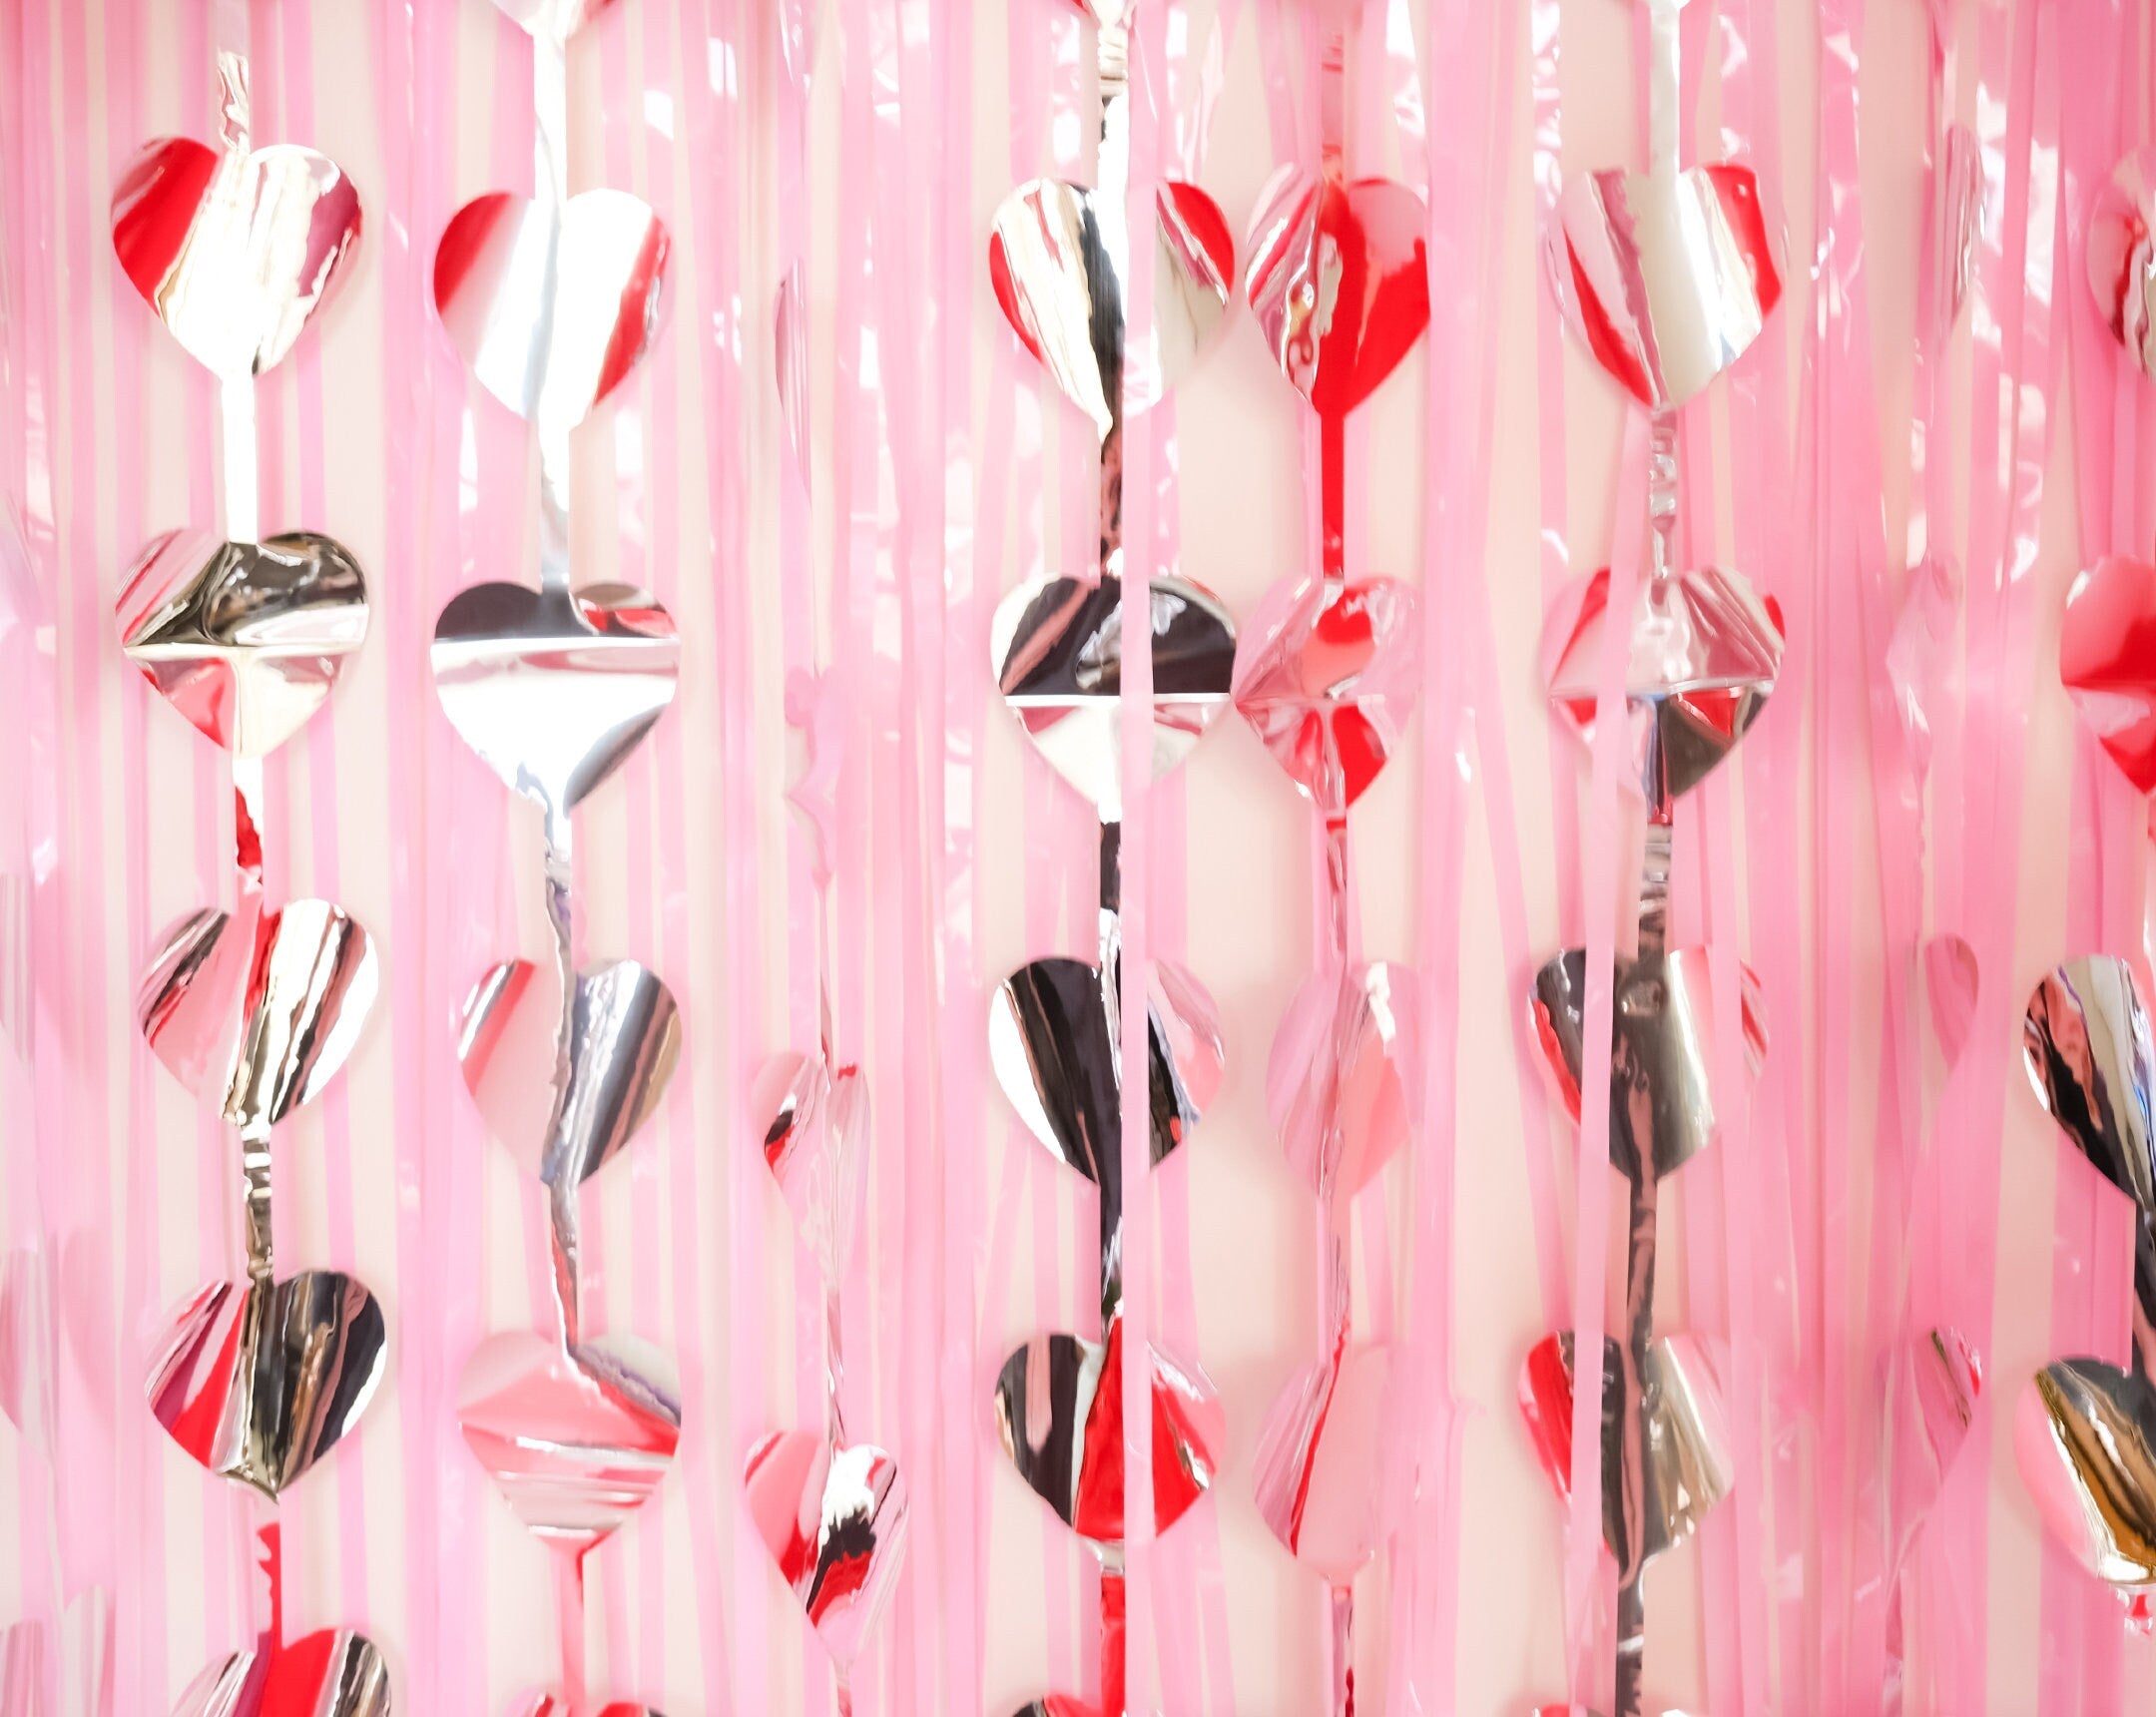 Valentine's Day theme 1st Birthday party balloon arch kit